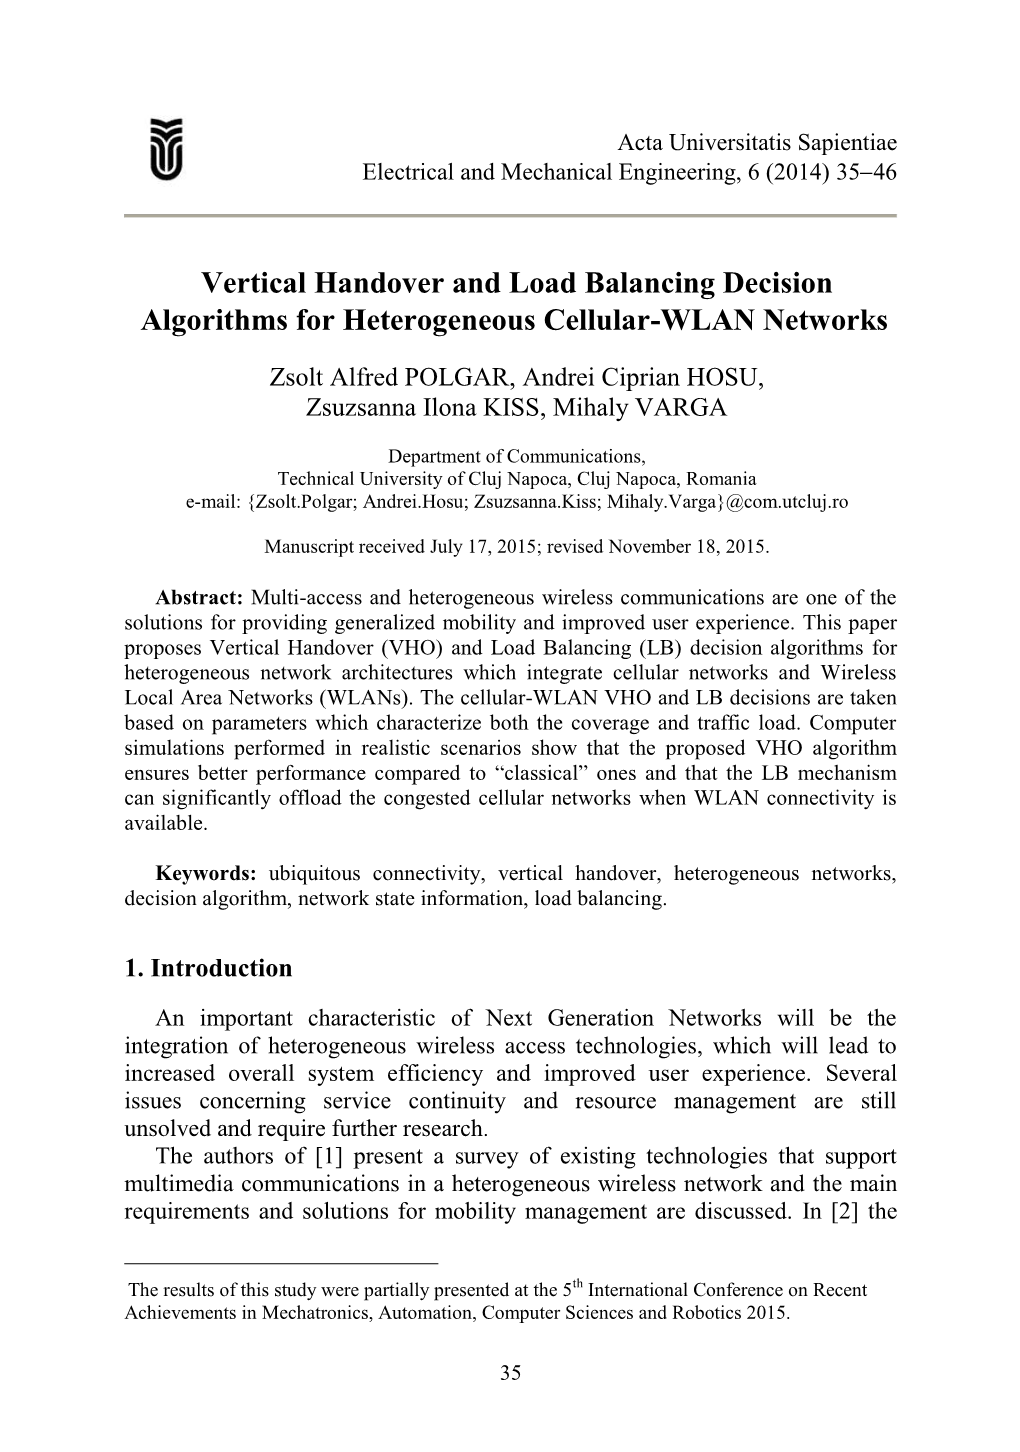 Vertical Handover and Load Balancing Decision Algorithms for Heterogeneous Cellular-WLAN Networks